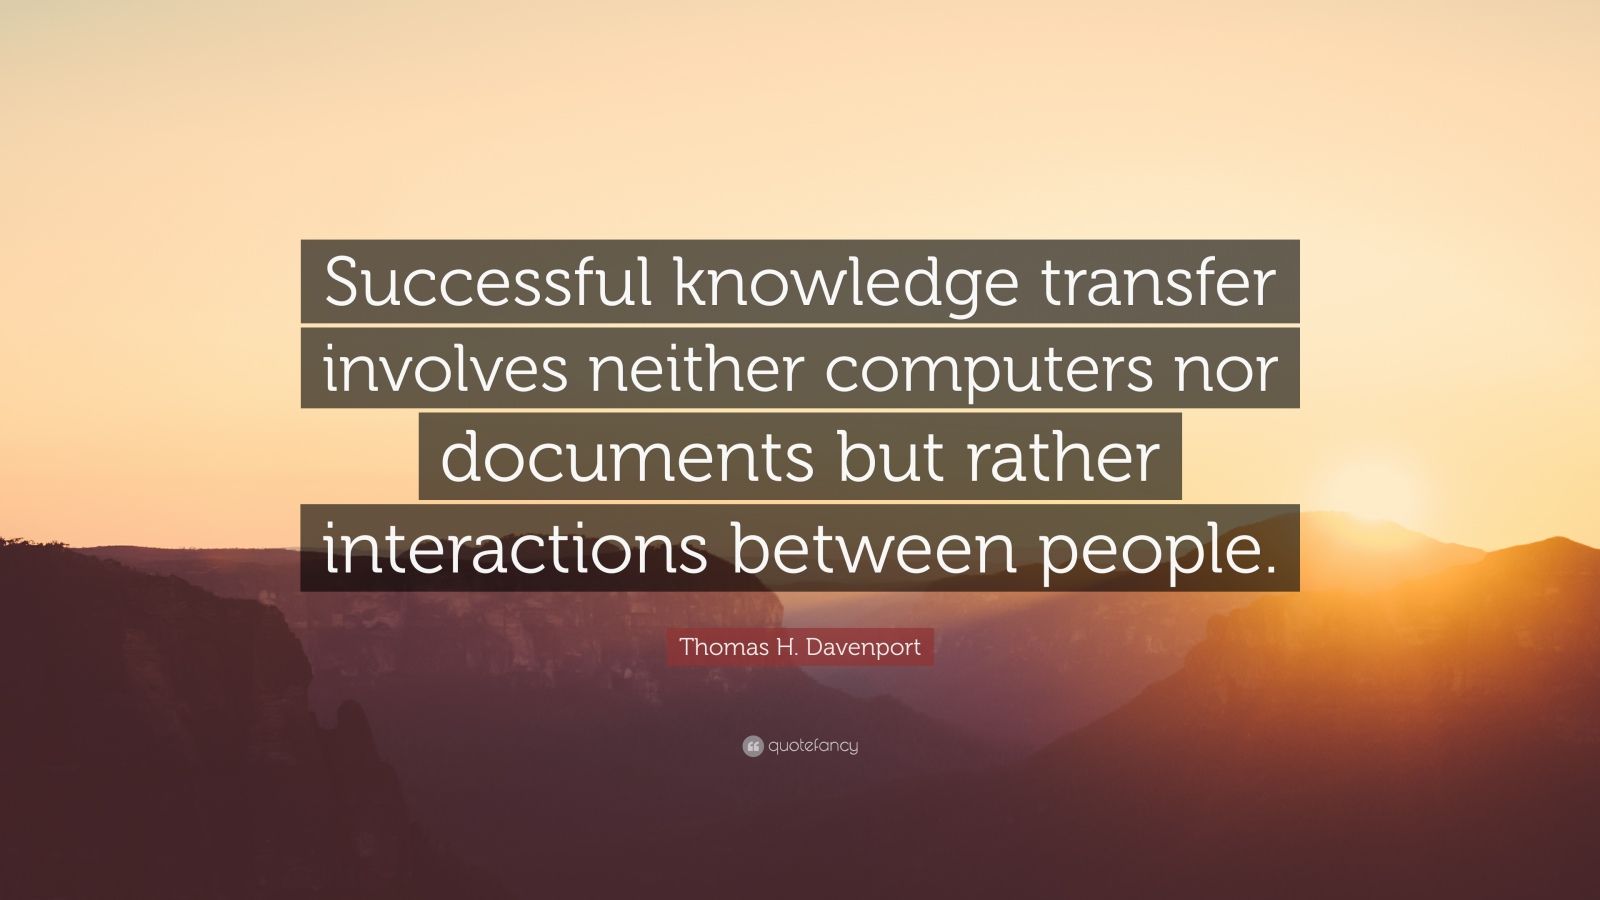 Thomas H. Davenport Quote: “Successful knowledge transfer involves